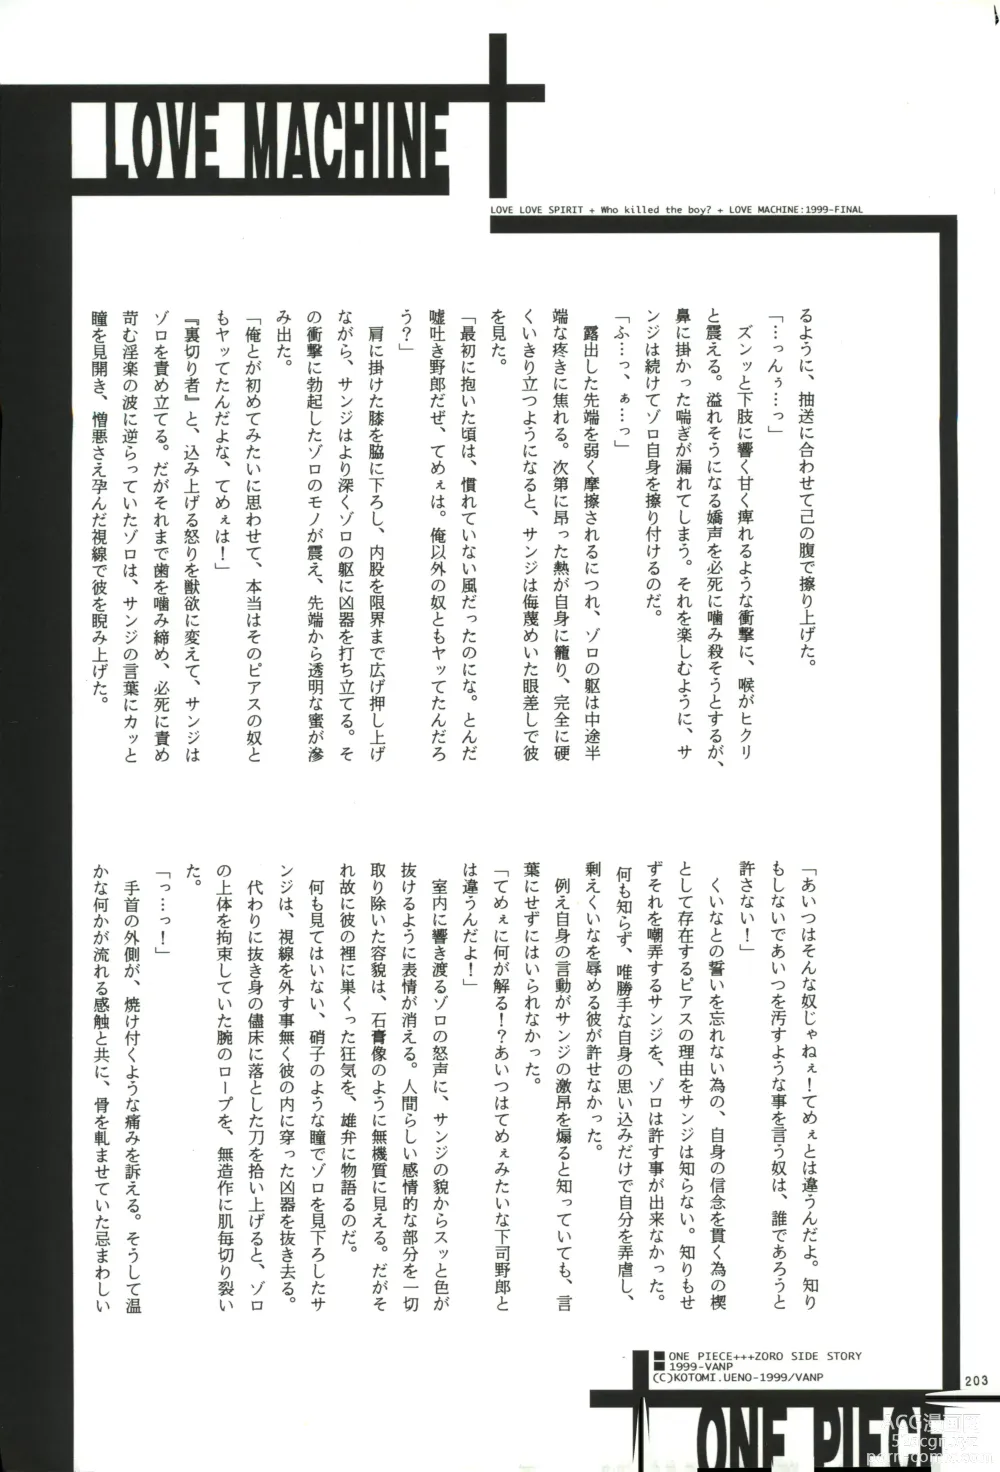 Page 202 of doujinshi FLASH BACK